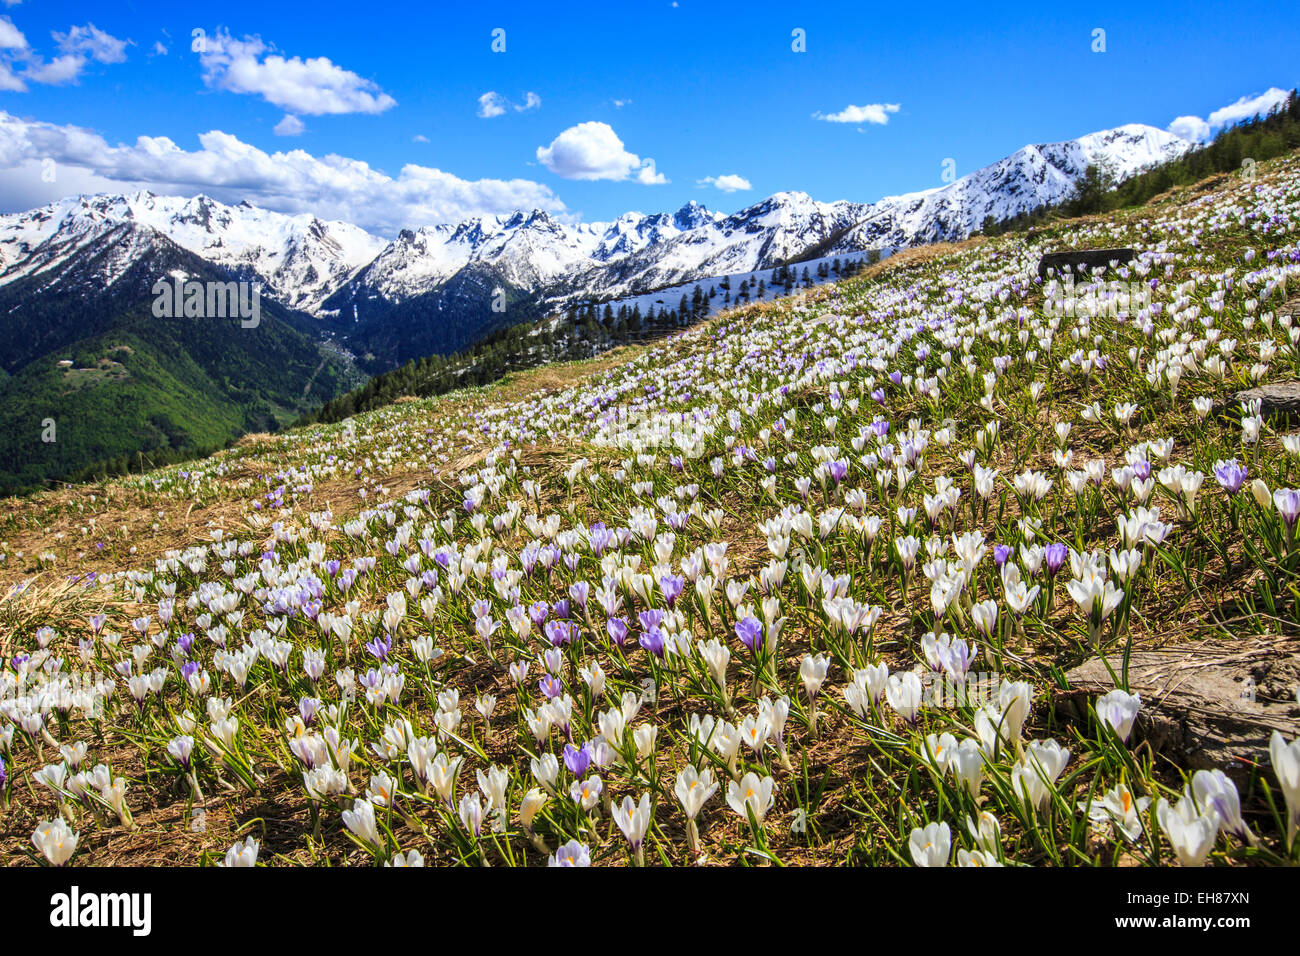 Crocus blooming sui pascoli nei dintorni di Cima Rosetta nelle Alpi Orobie, Lombardia, Italia, Europa Foto Stock